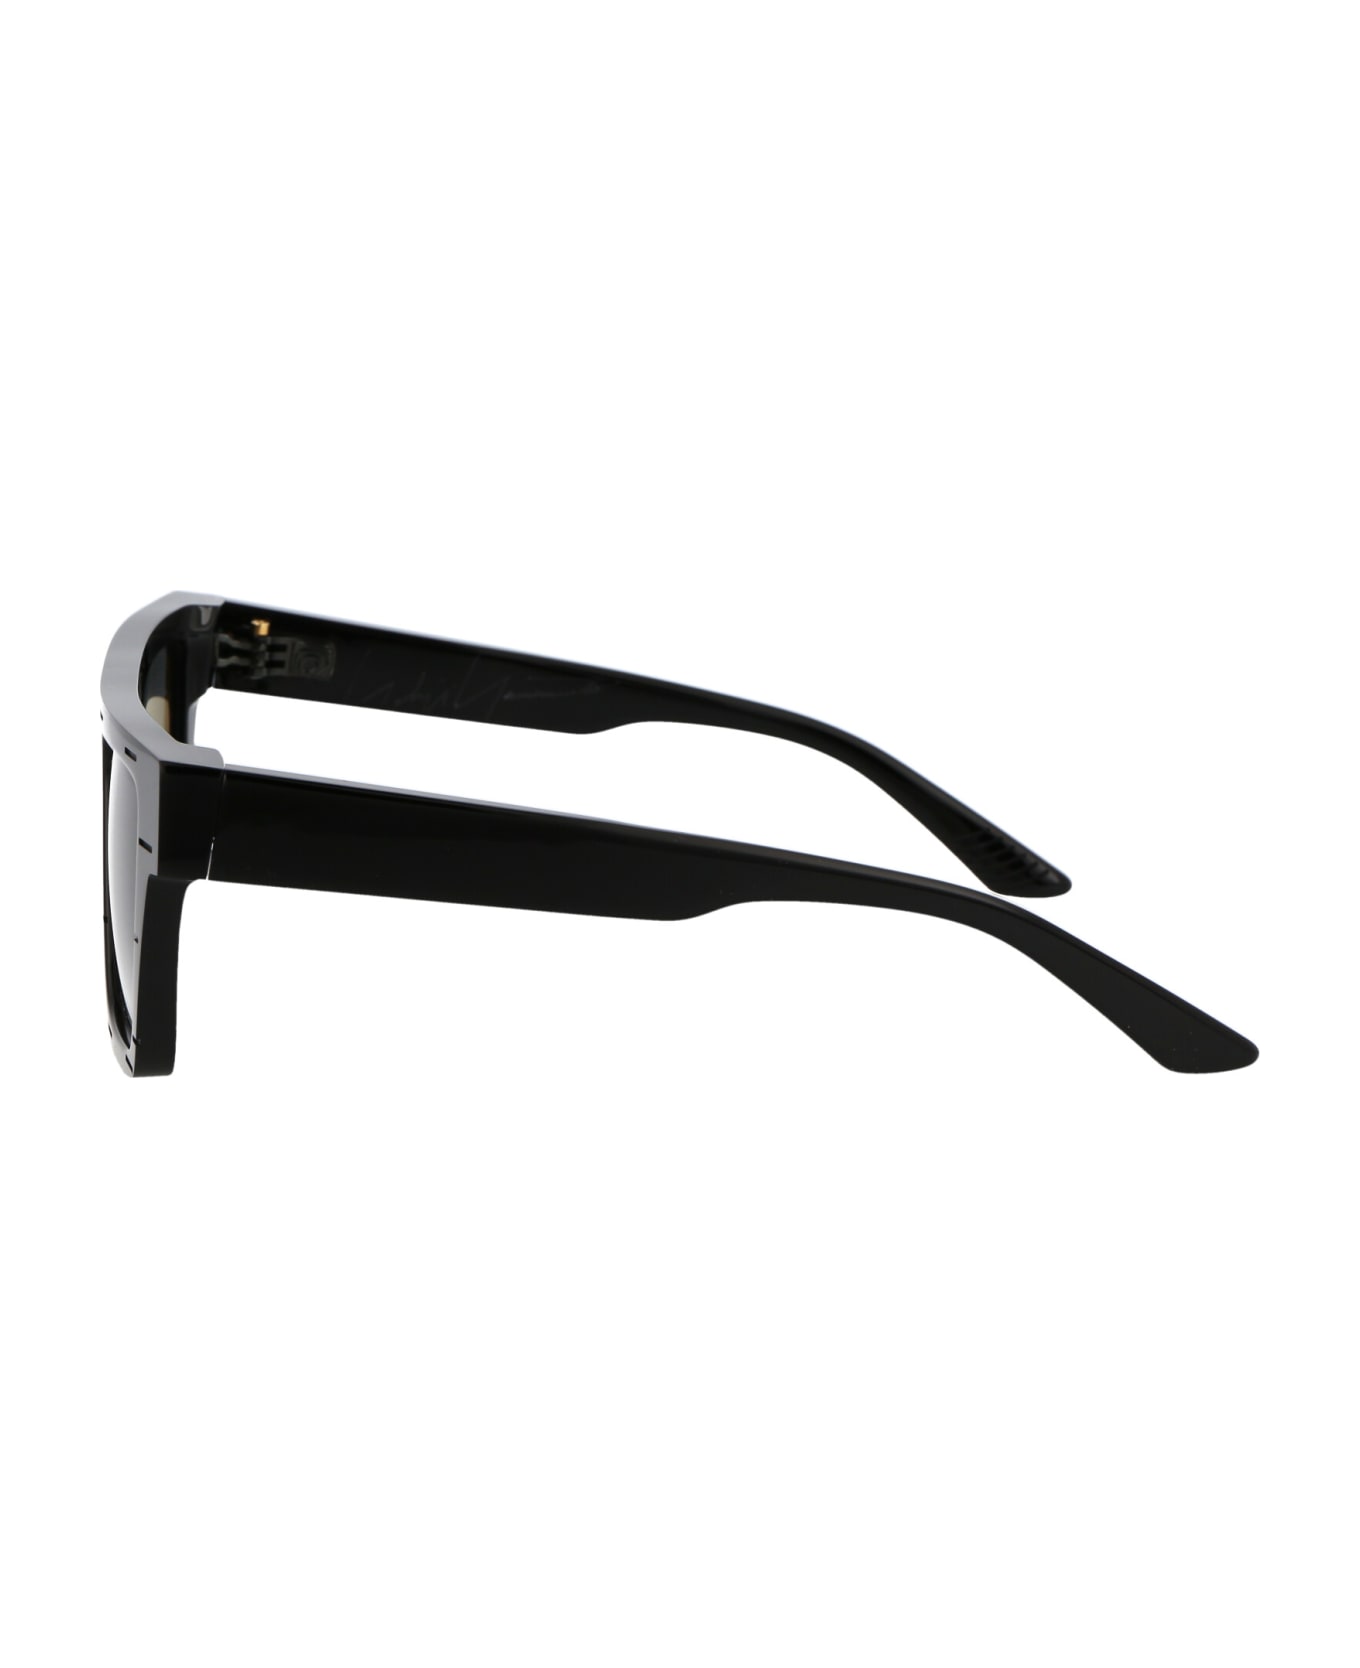 Yohji Yamamoto Slook 002 Sunglasses - A001 PURE BLACK/JAPAN GOLD サングラス